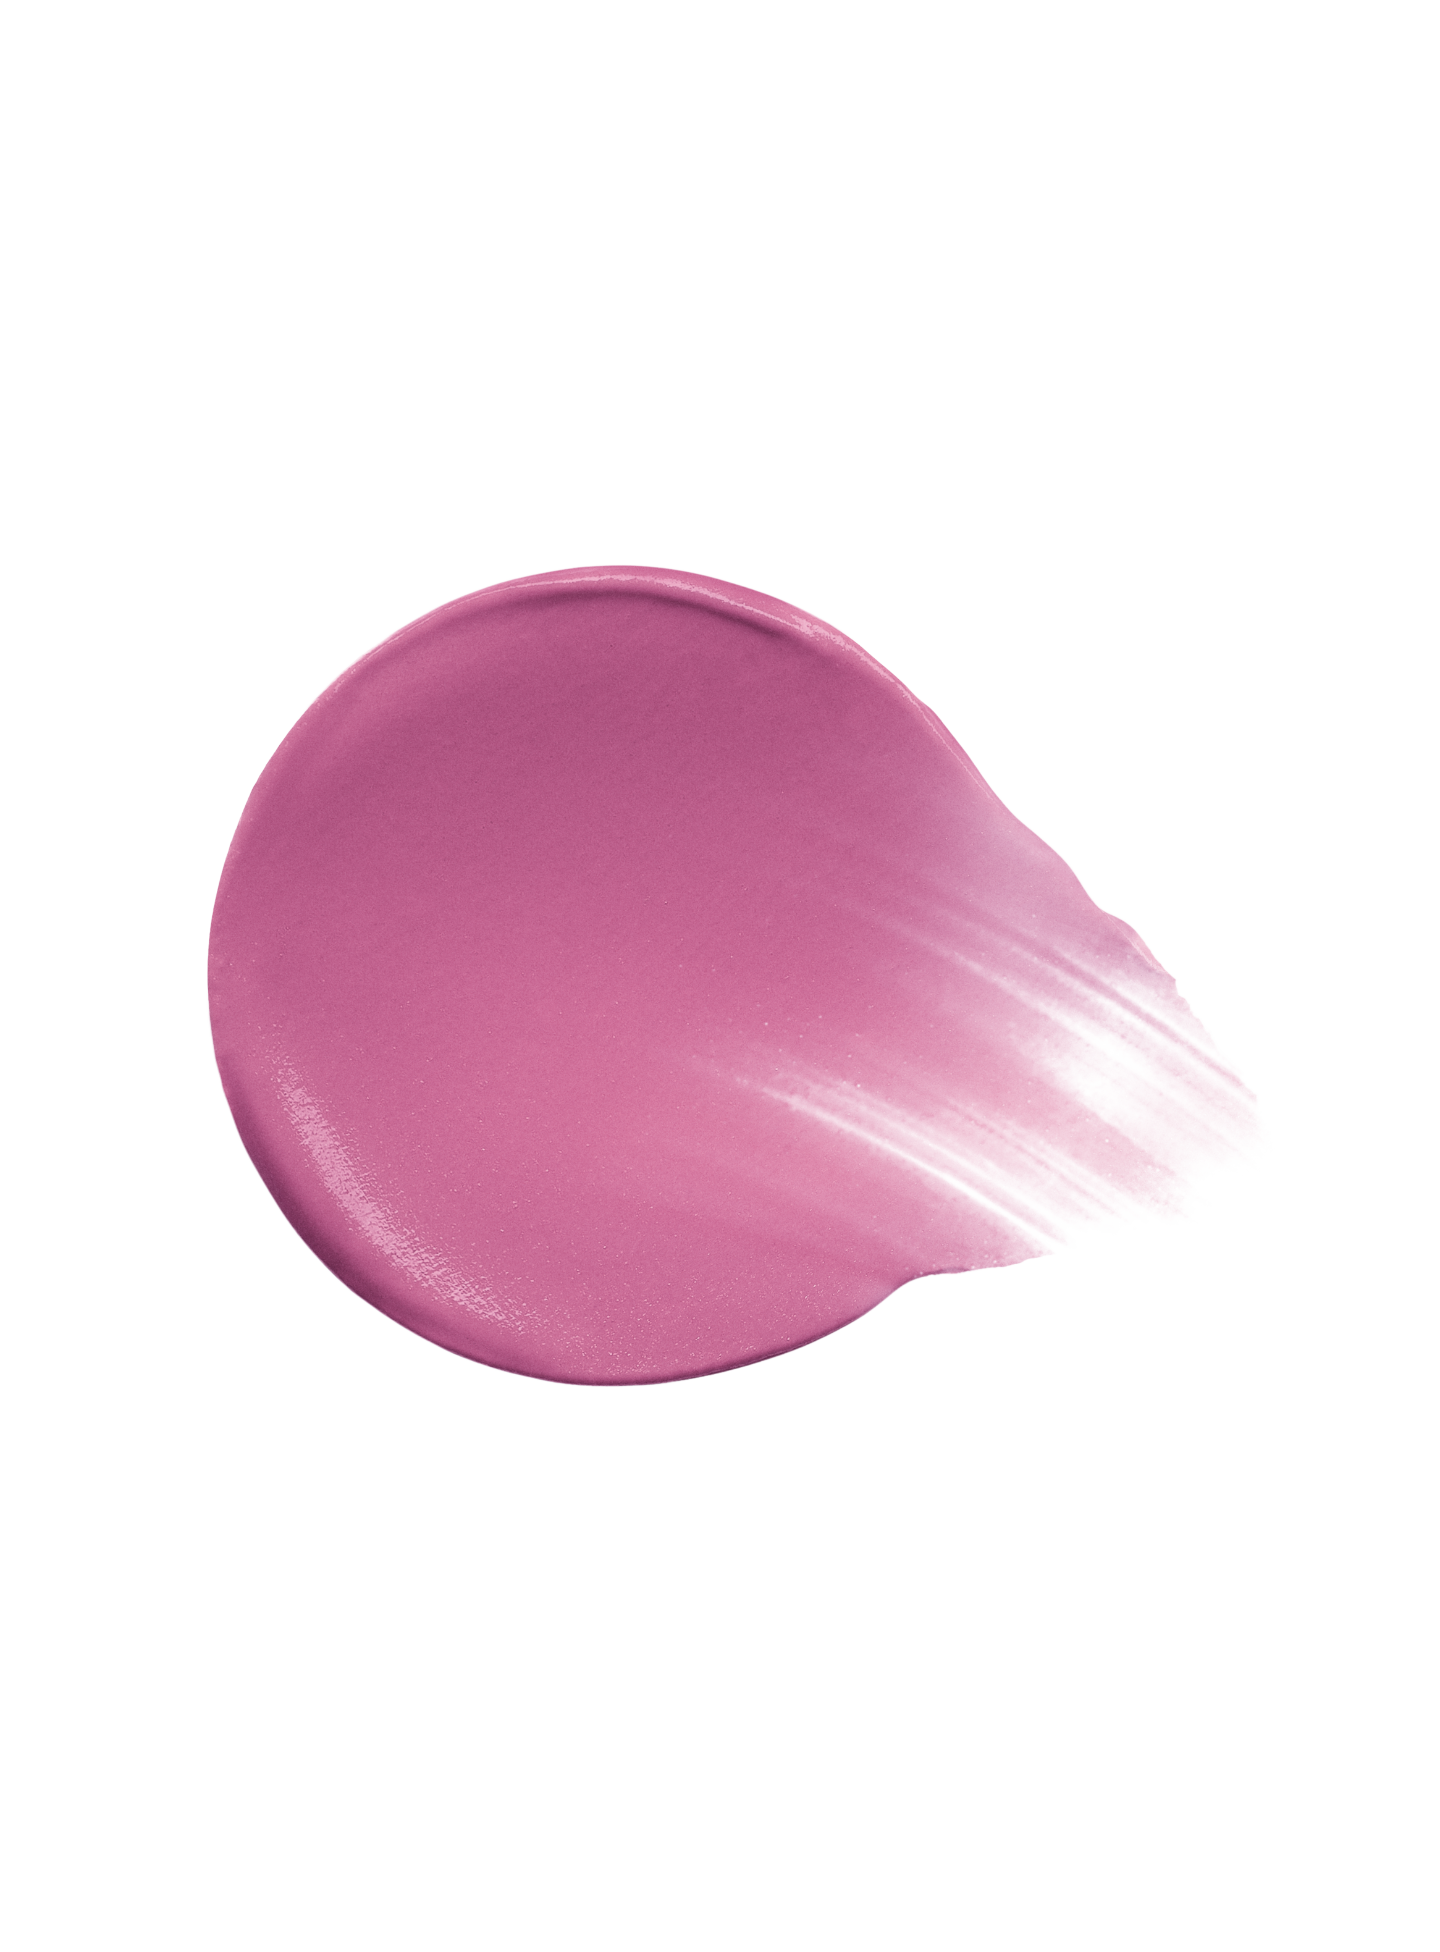 Rare Beauty Soft Pinch Liquid Blush - Grace - 7.5ml